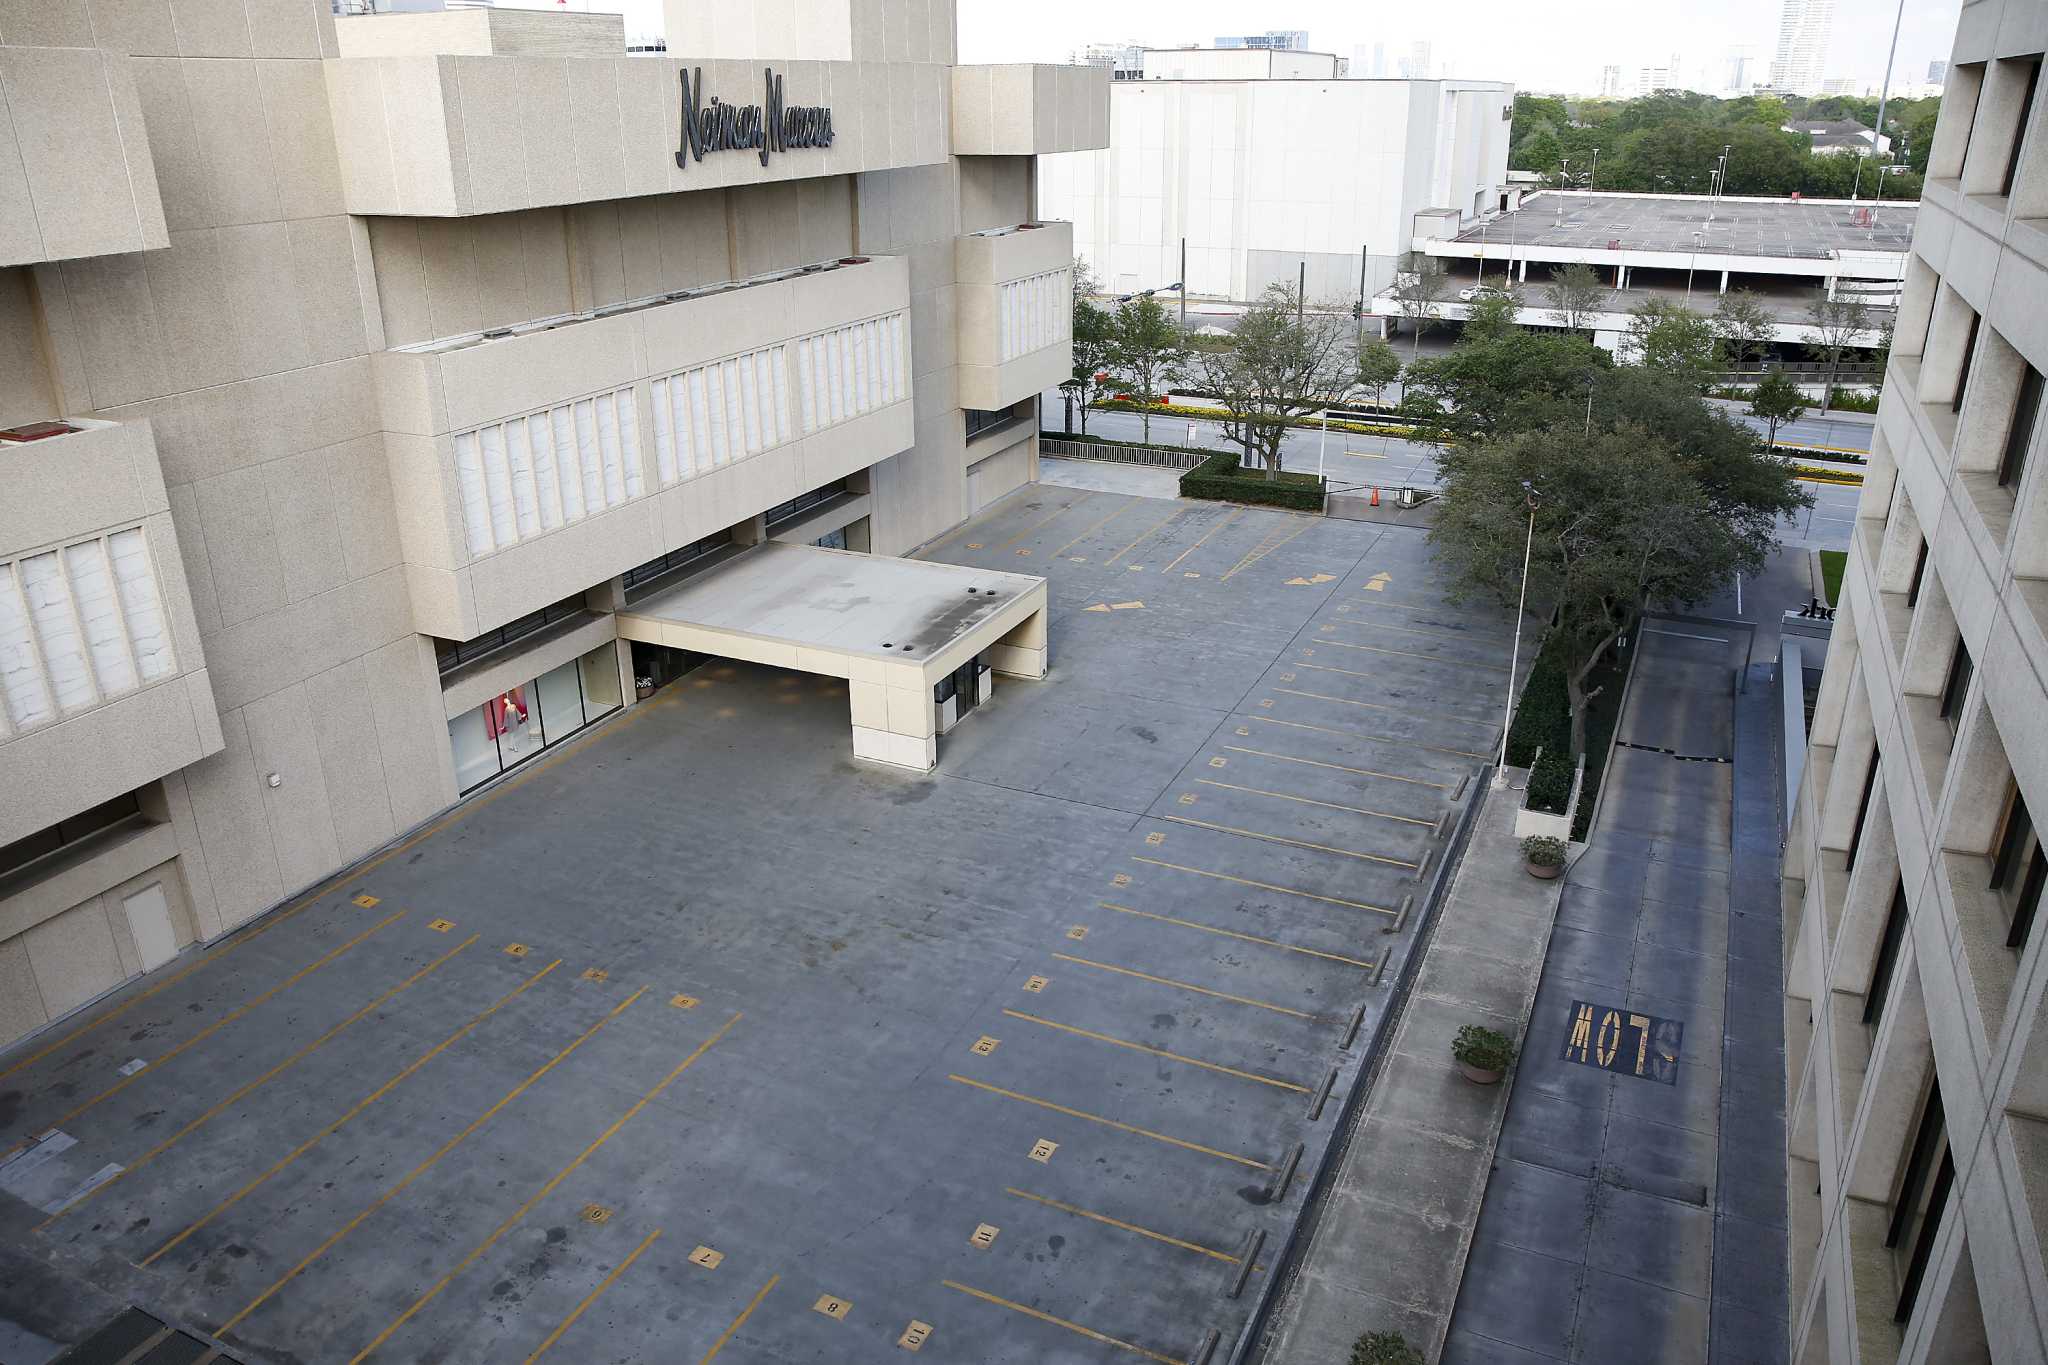 Neiman Marcus at The Galleria - A Shopping Center in Houston, TX - A Simon  Property